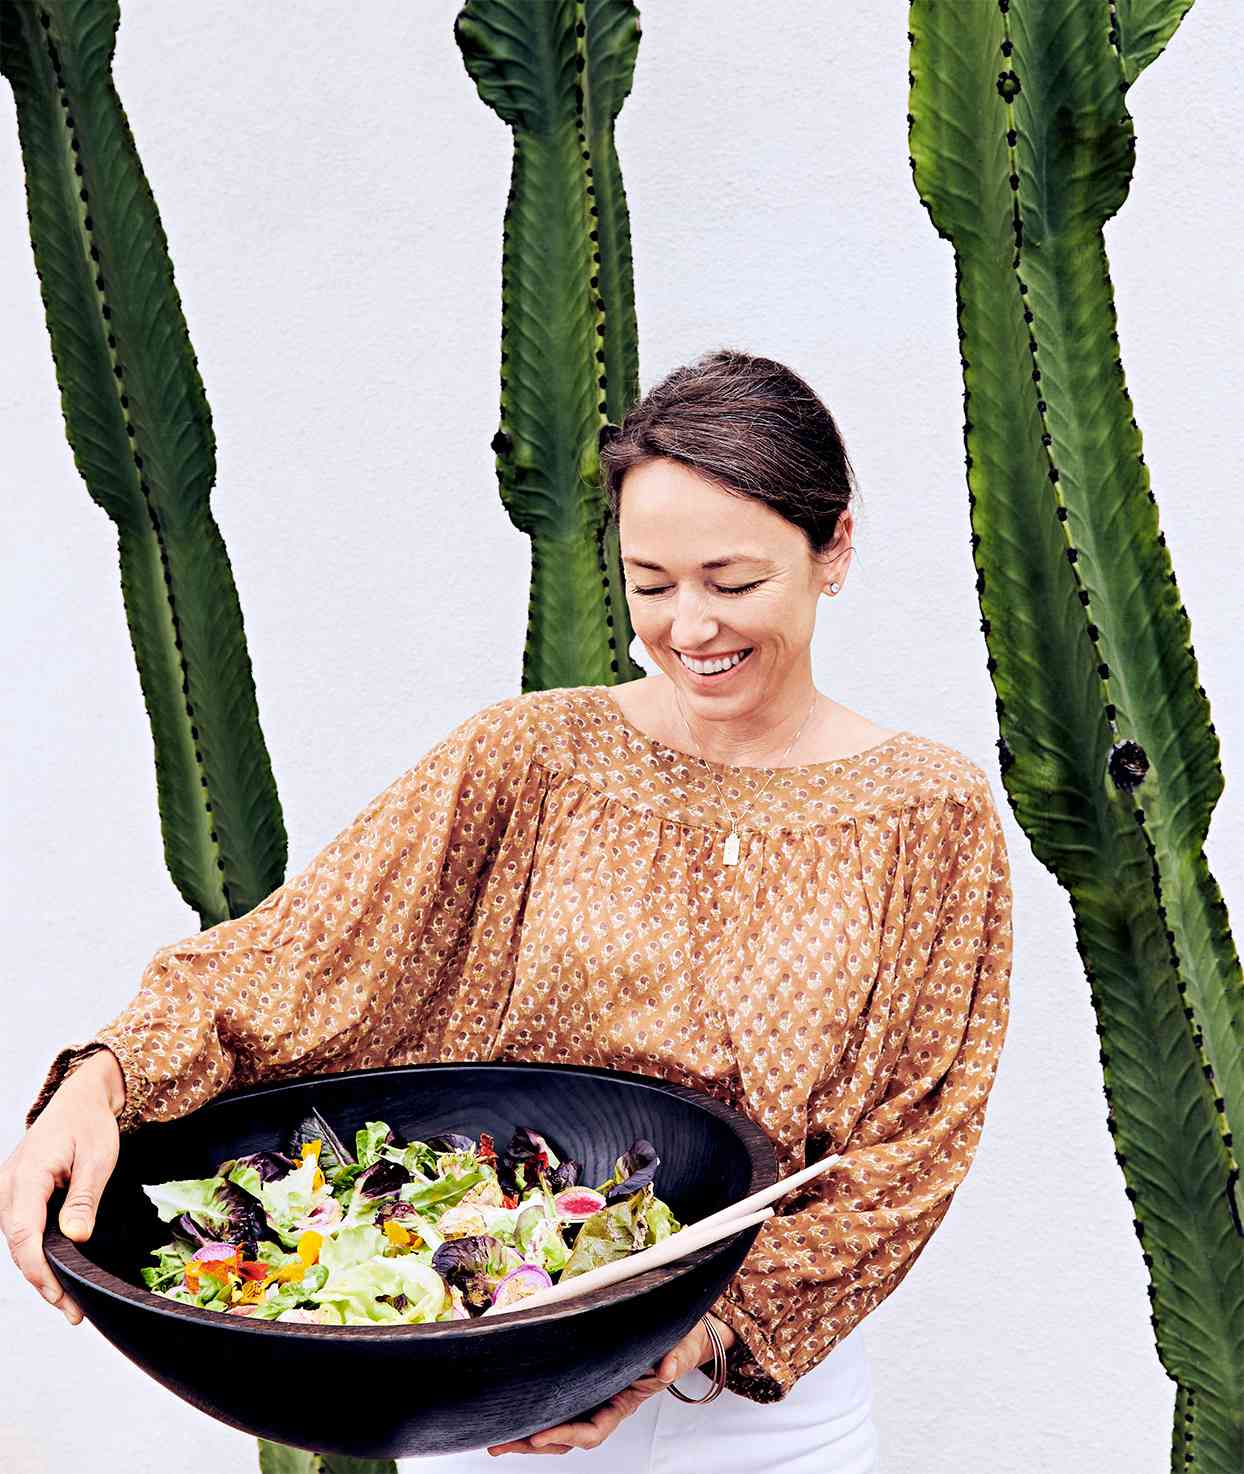 jora vess holding green salad with pickled-shallot vinaigrette